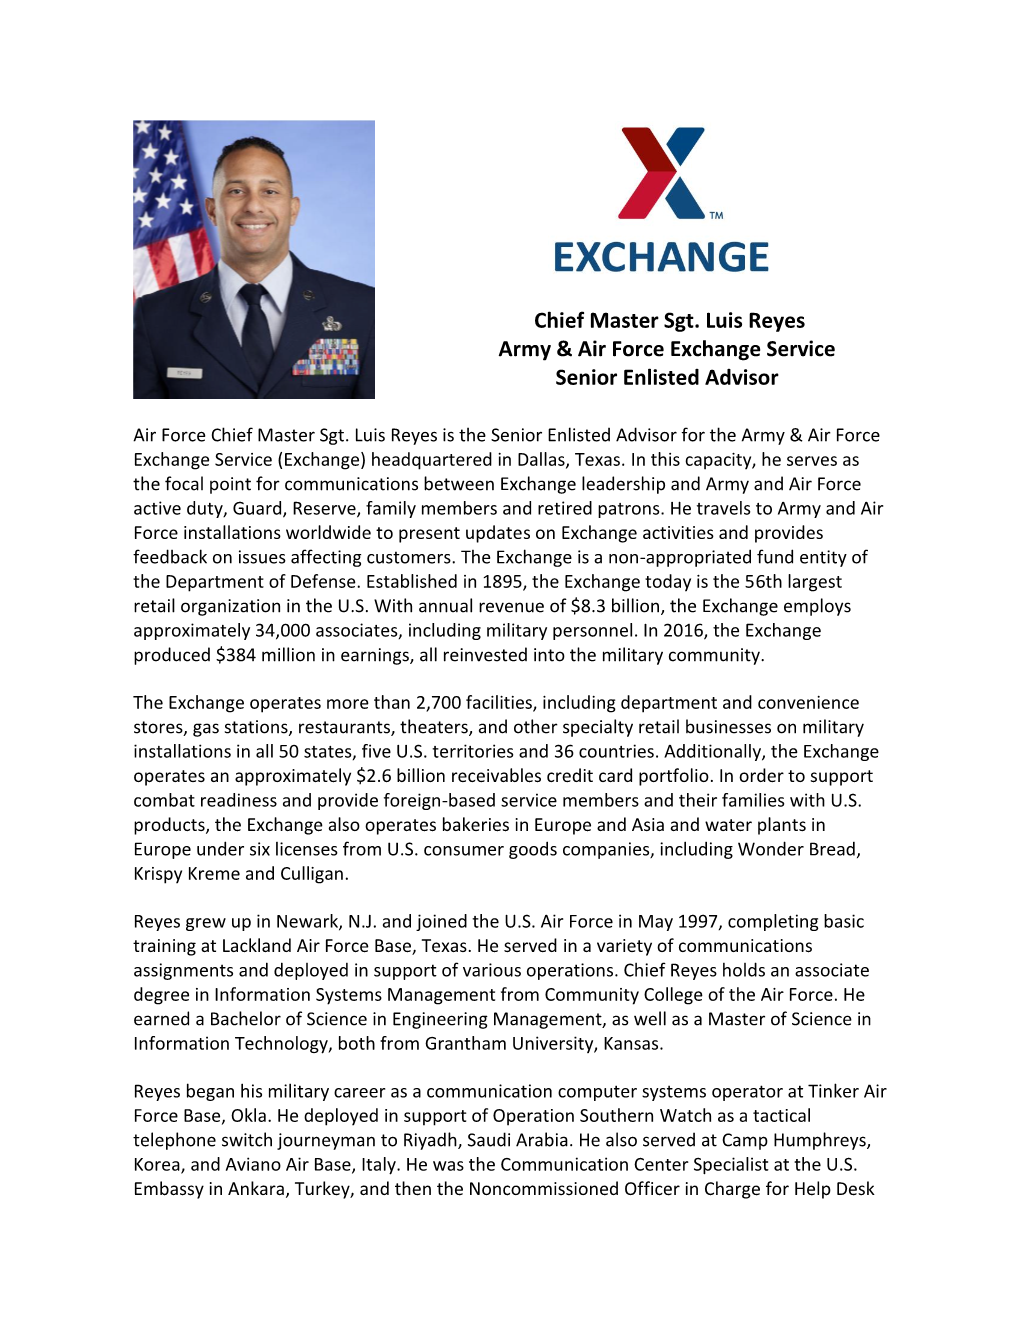 Chief Master Sgt. Luis Reyes Army & Air Force Exchange Service Senior